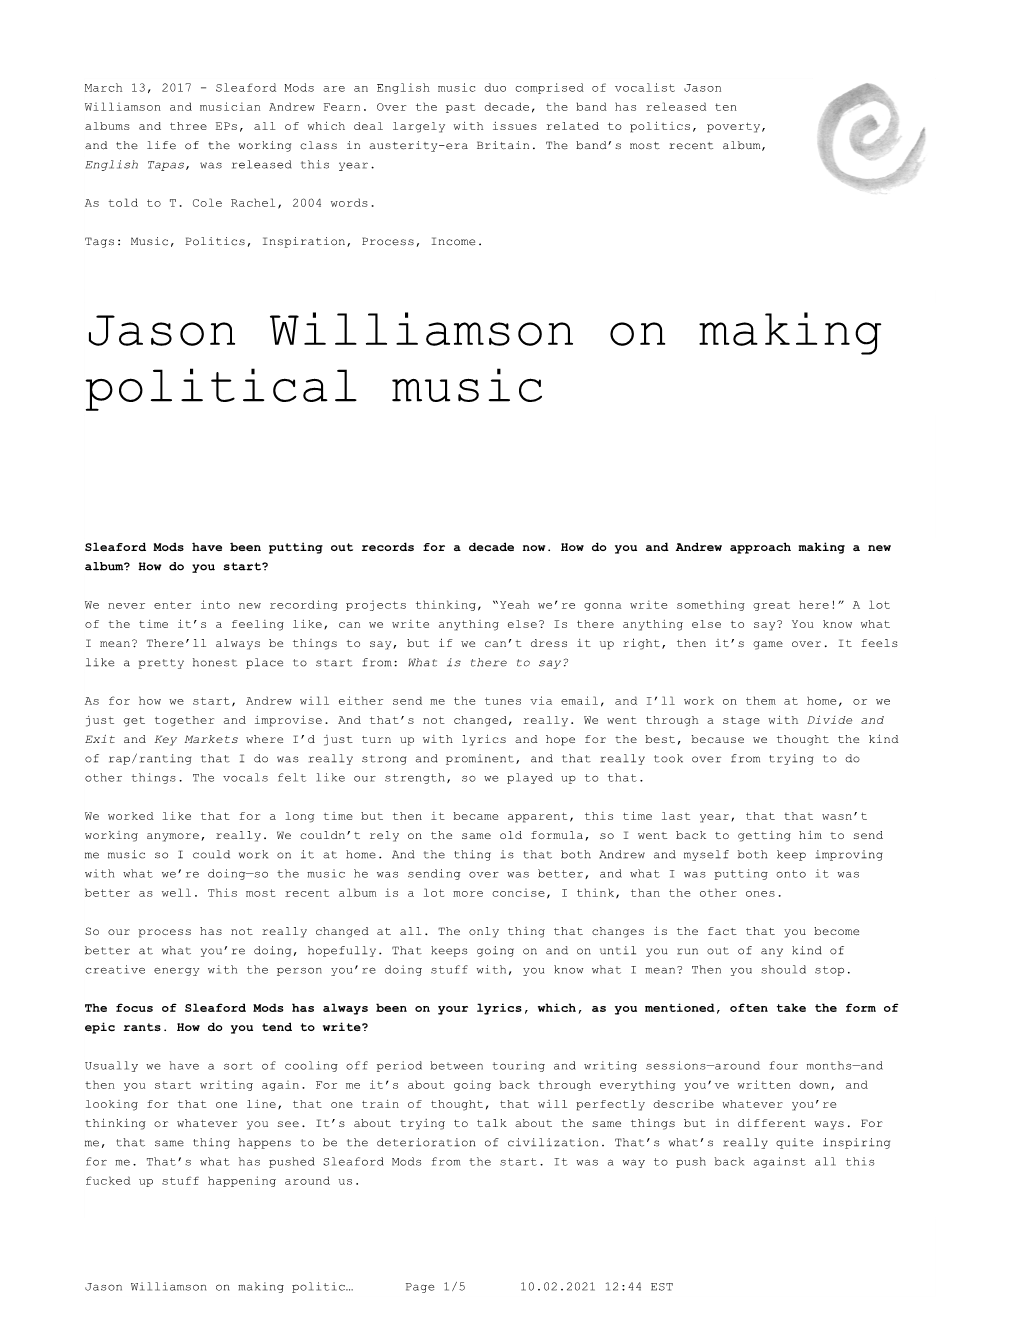 Jason Williamson on Making Political Music